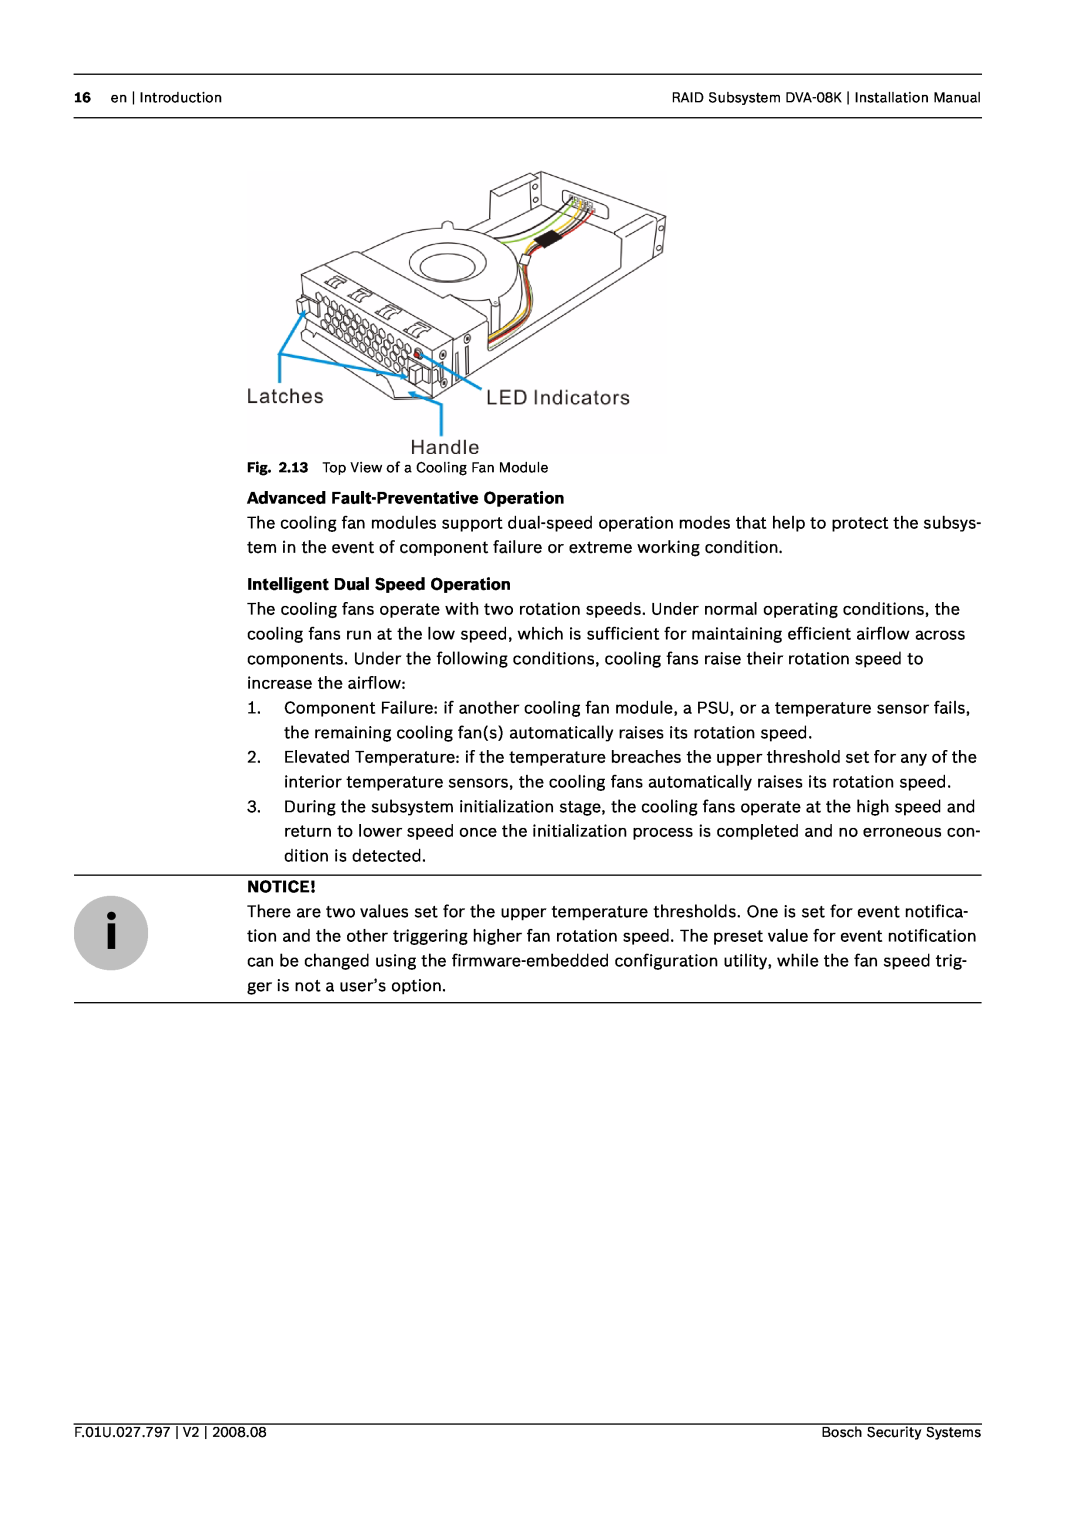 Bosch Appliances DVA-08K manual Advanced Fault-Preventative Operation, Intelligent Dual Speed Operation 